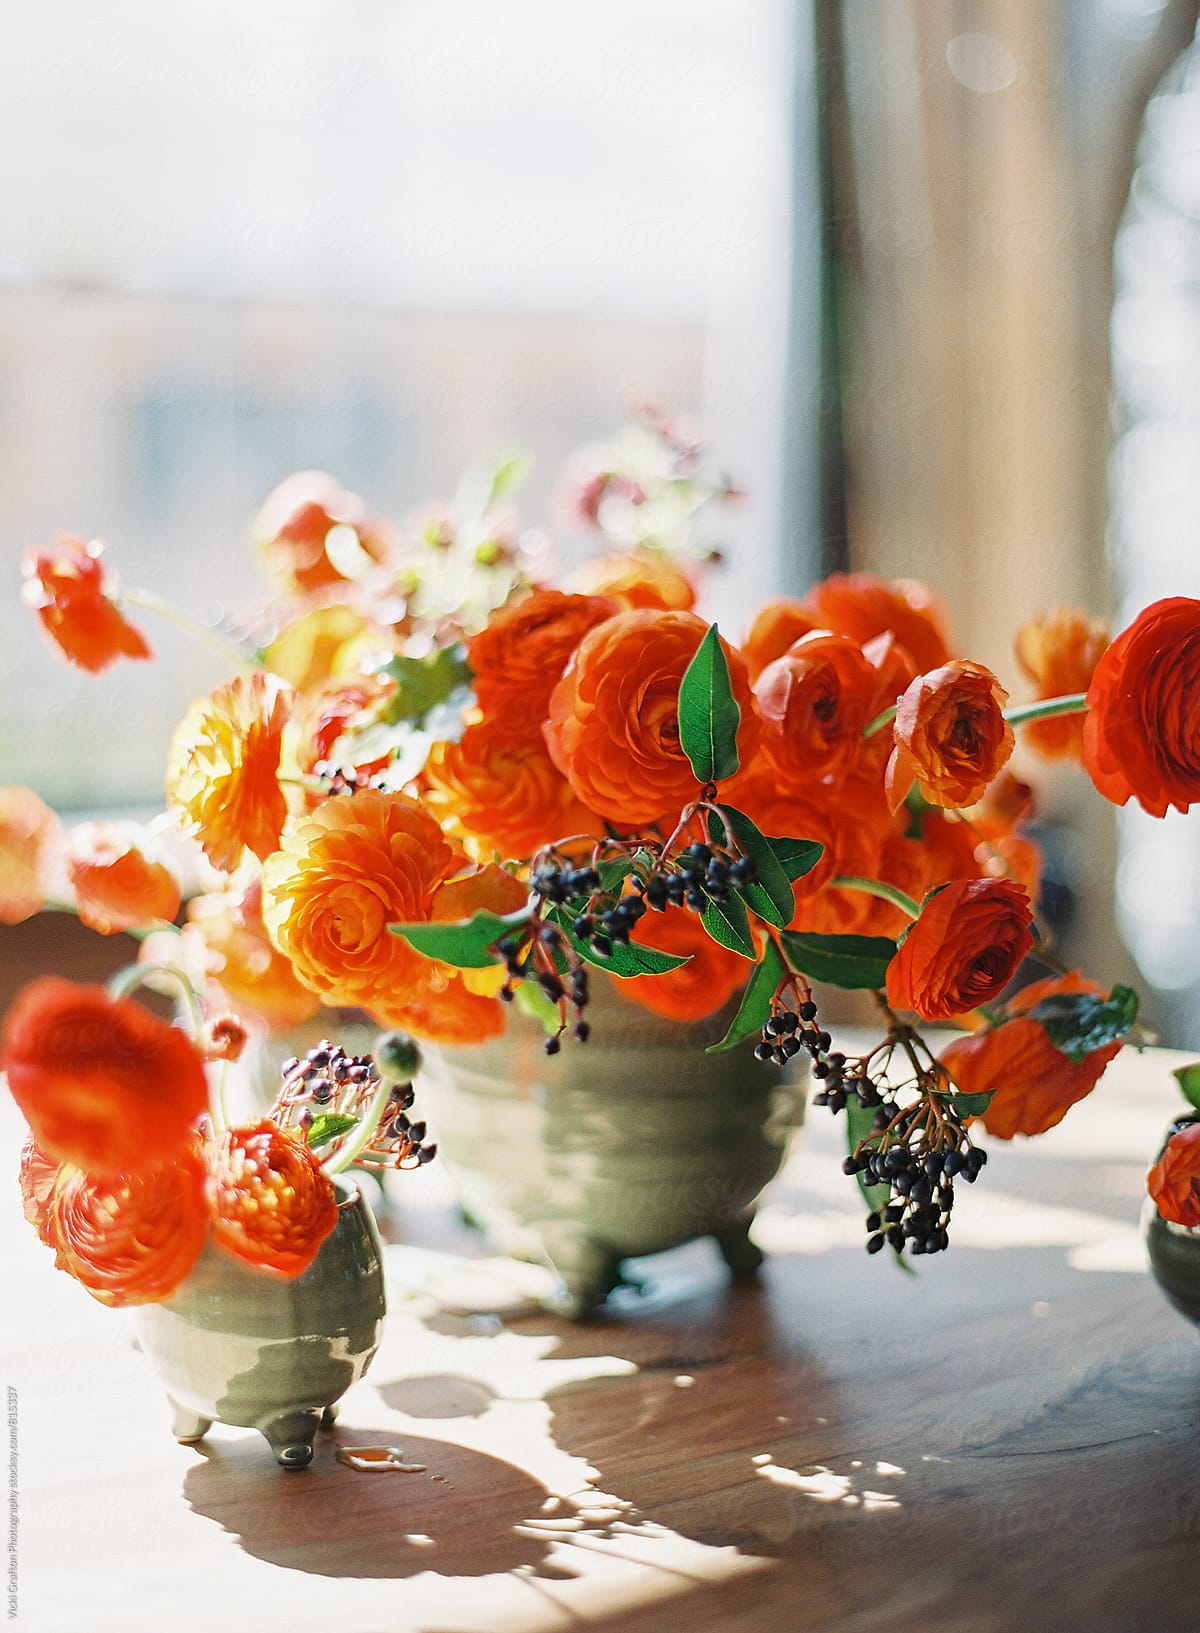 Orange Floral Arrangement On Table by Stocksy Contributor Vicki